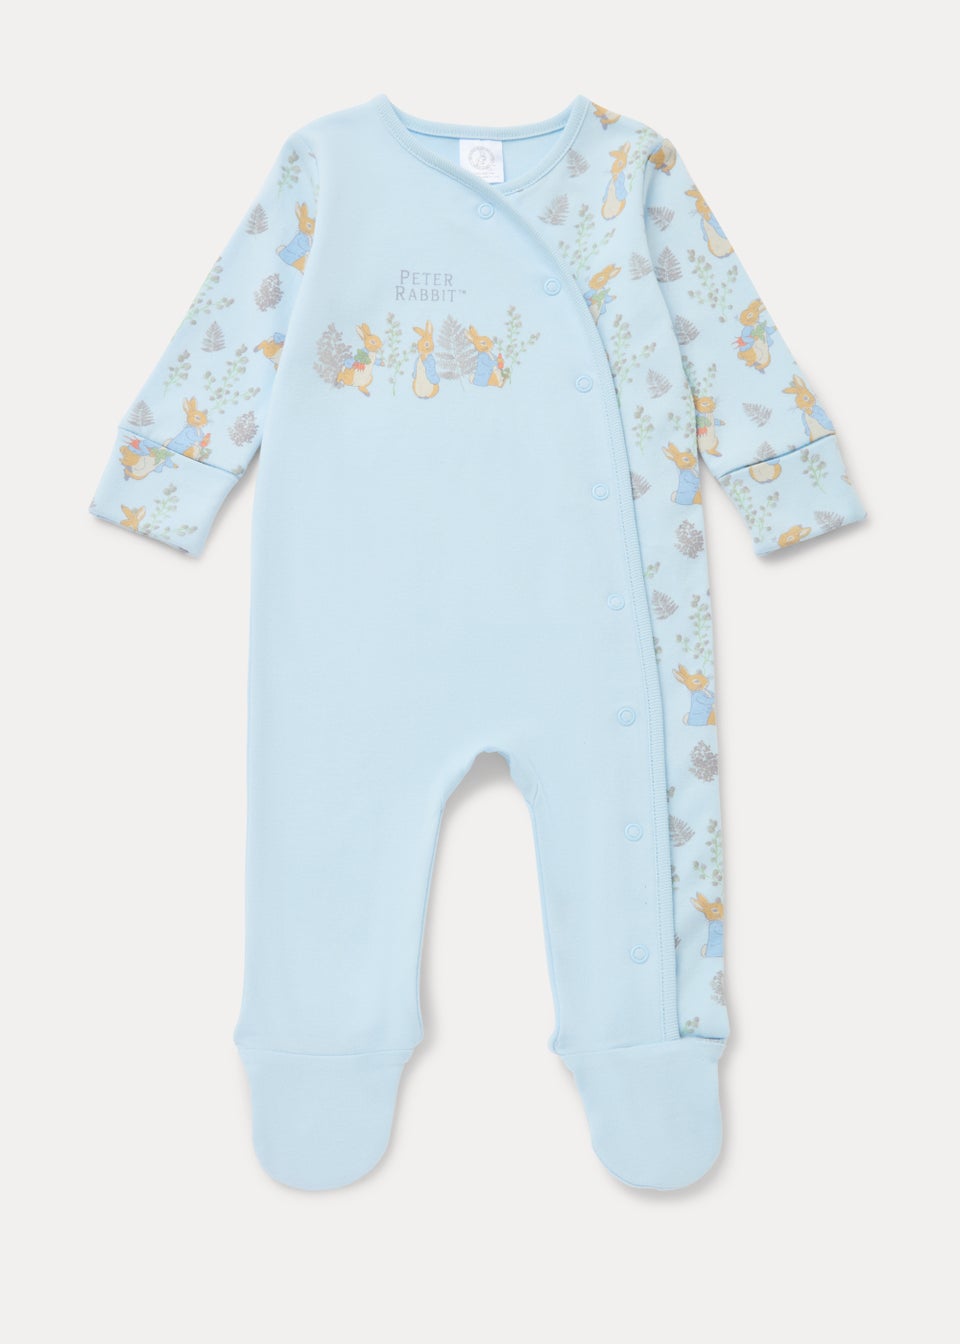 Baby Blue Peter Rabbit Sleepsuit (Newborn-12mths)